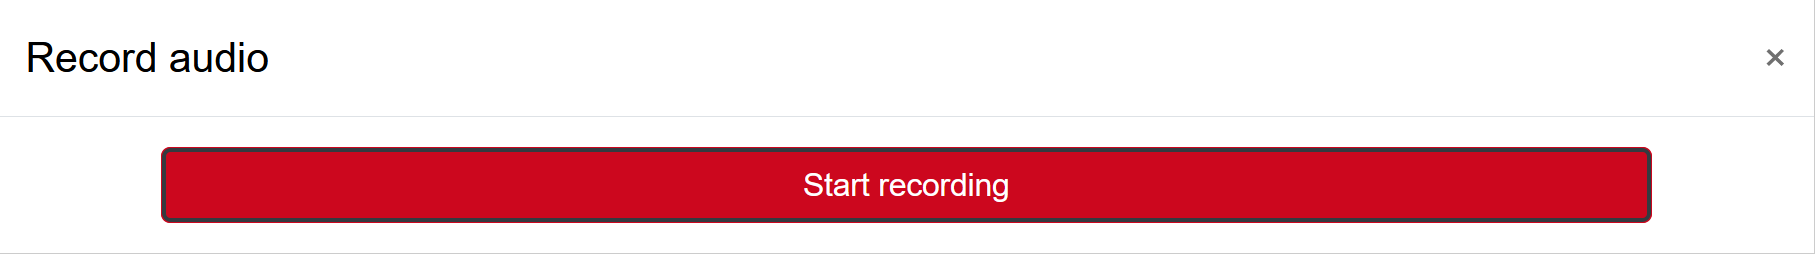 Screenshot: Record audio, start recording